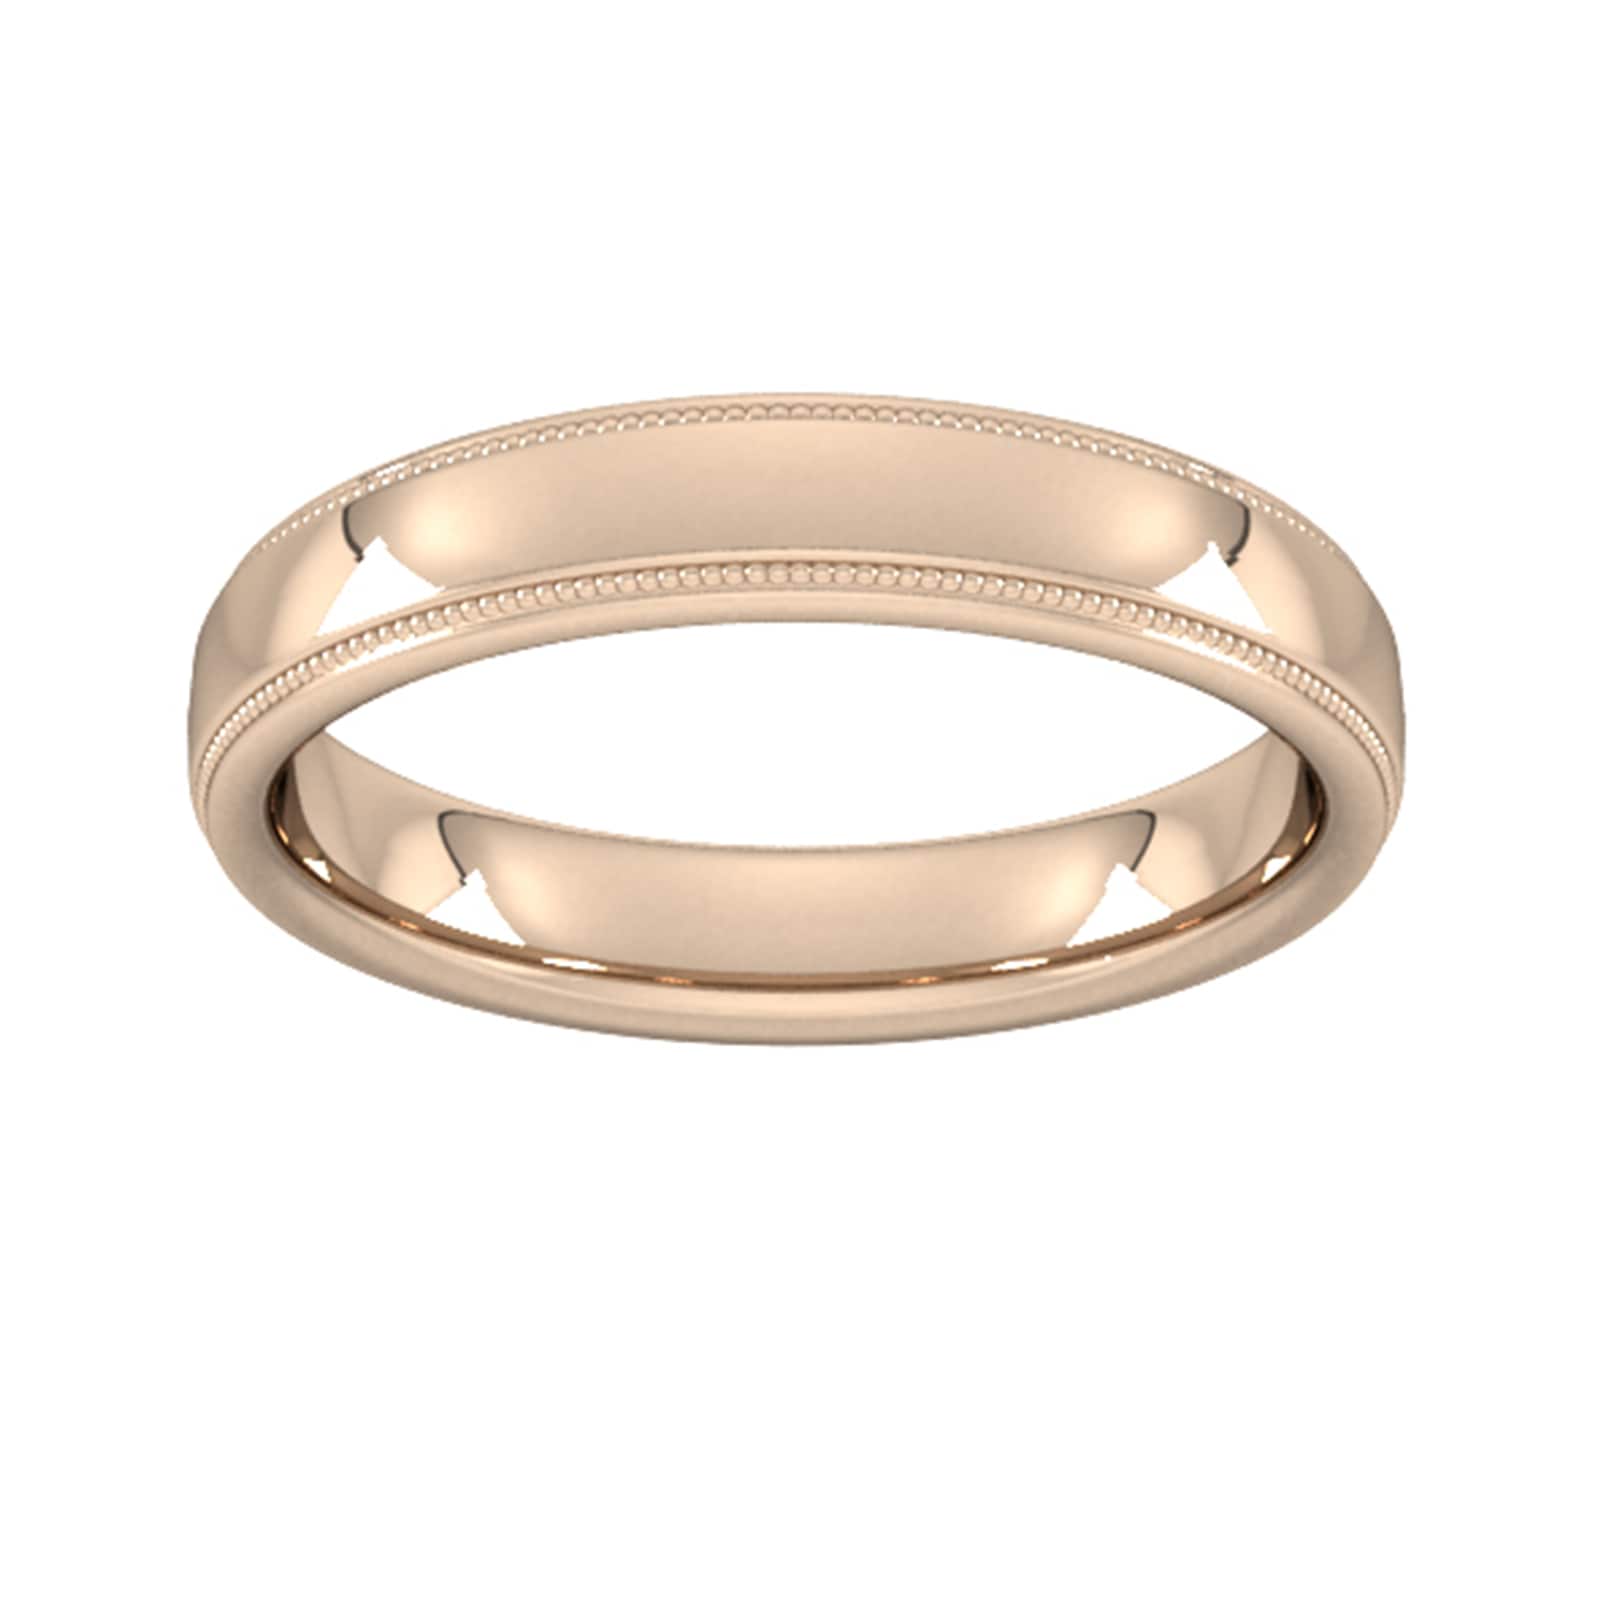 4mm D Shape Standard Milgrain Edge Wedding Ring In 9 Carat Rose Gold - Ring Size Q